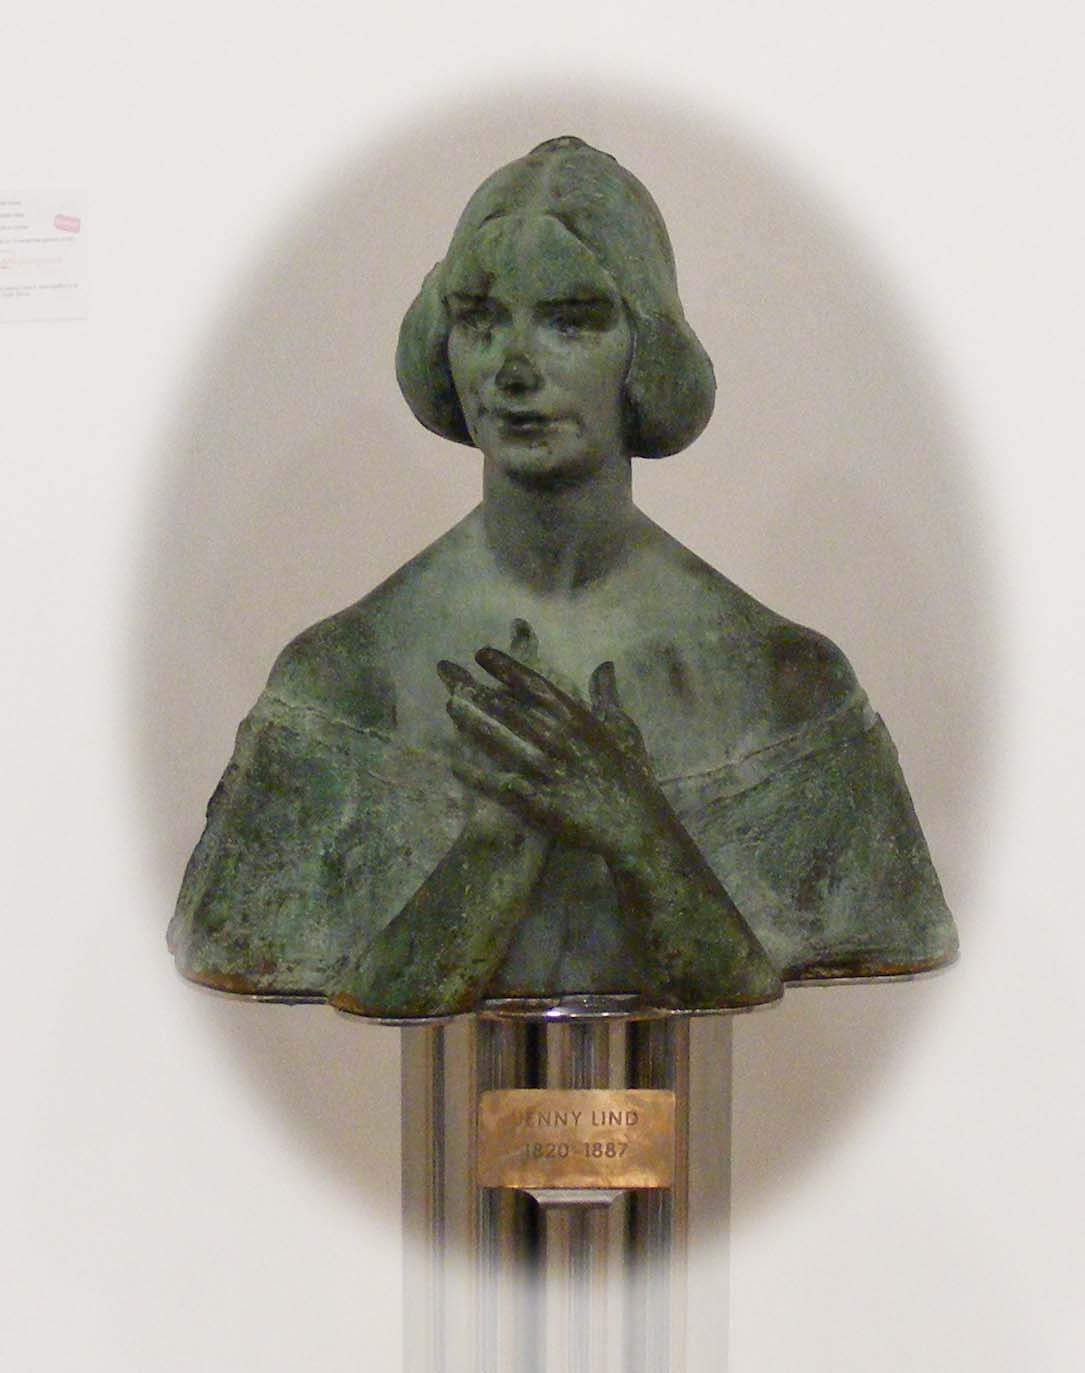 Sculpture of Jenny Lind